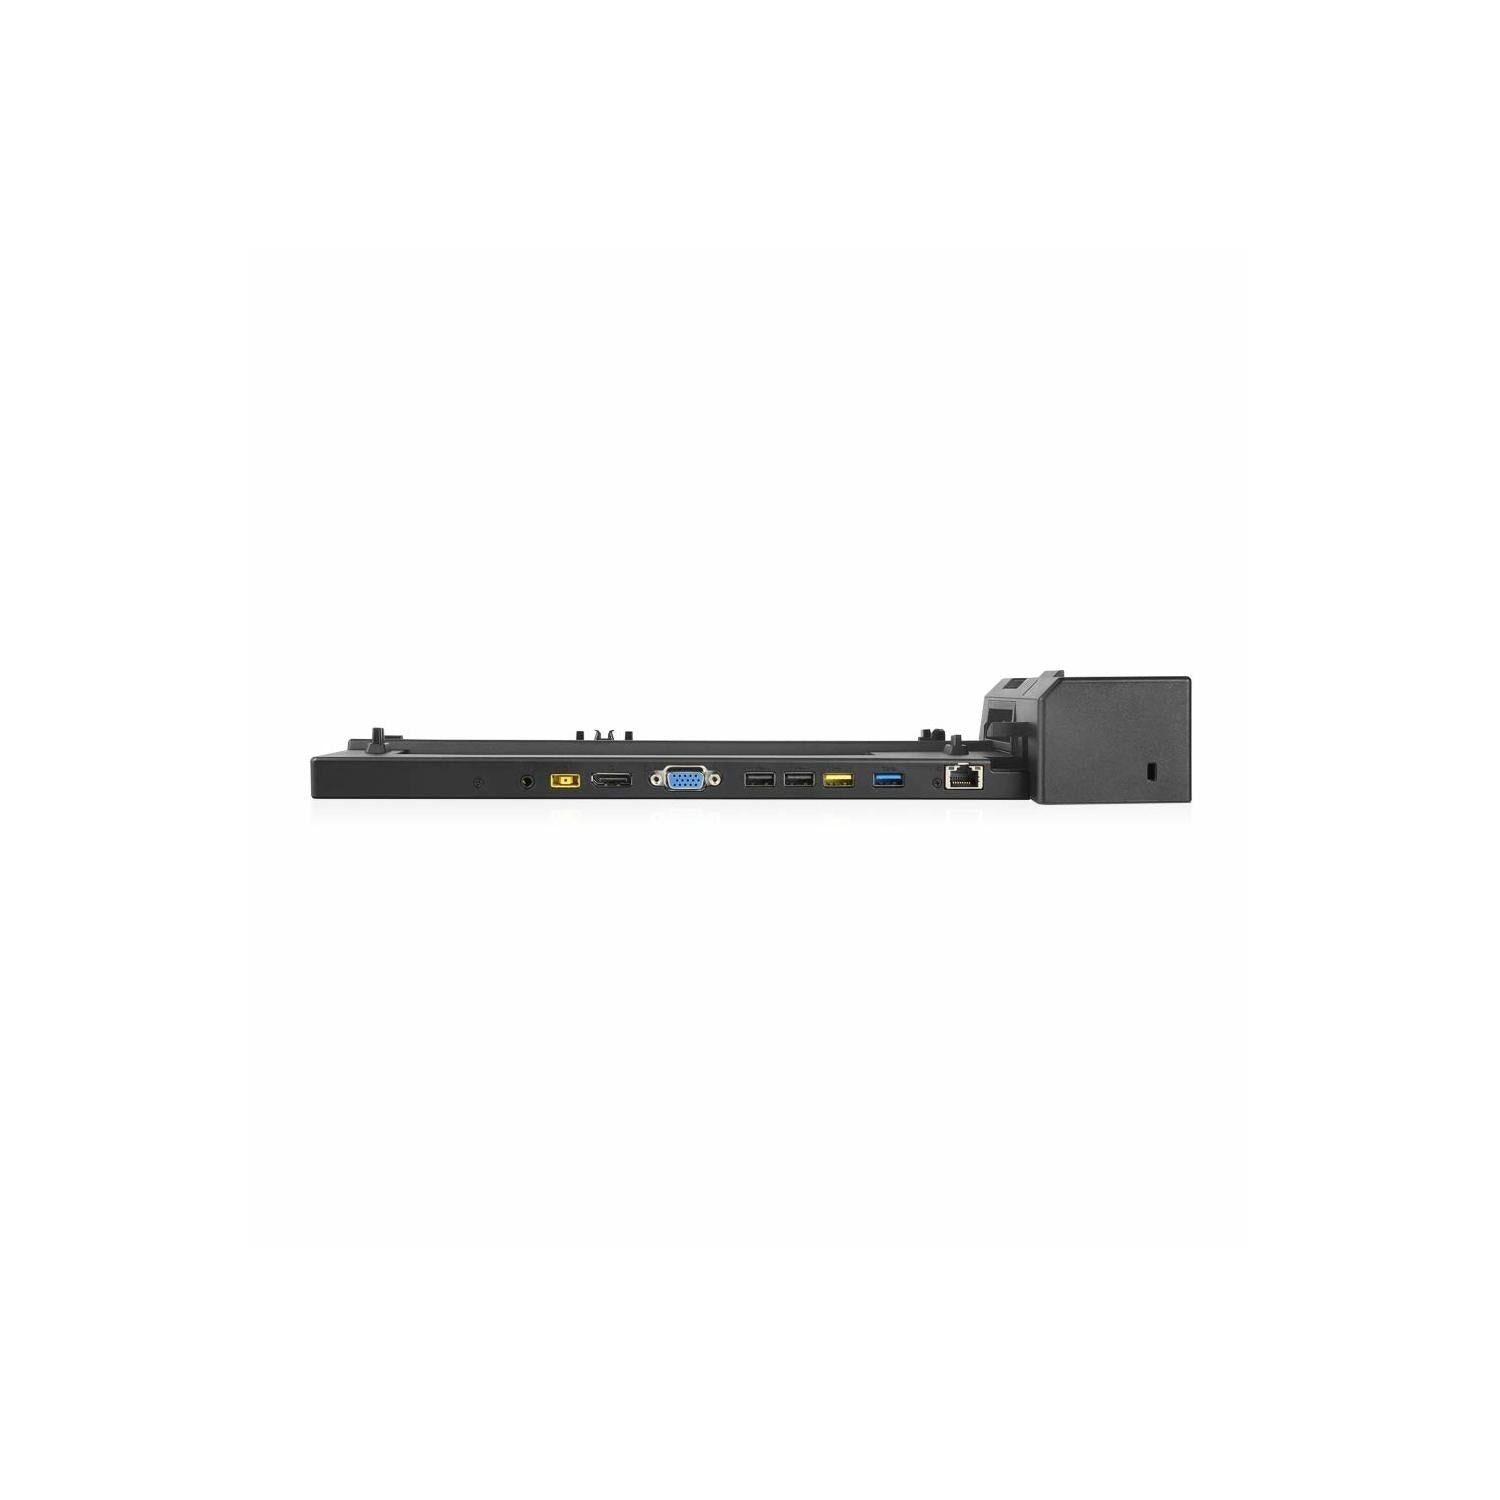 Lenovo 40AJ0135UK ThinkPad Ultra Docking Station - Black - Refurbished Pristine